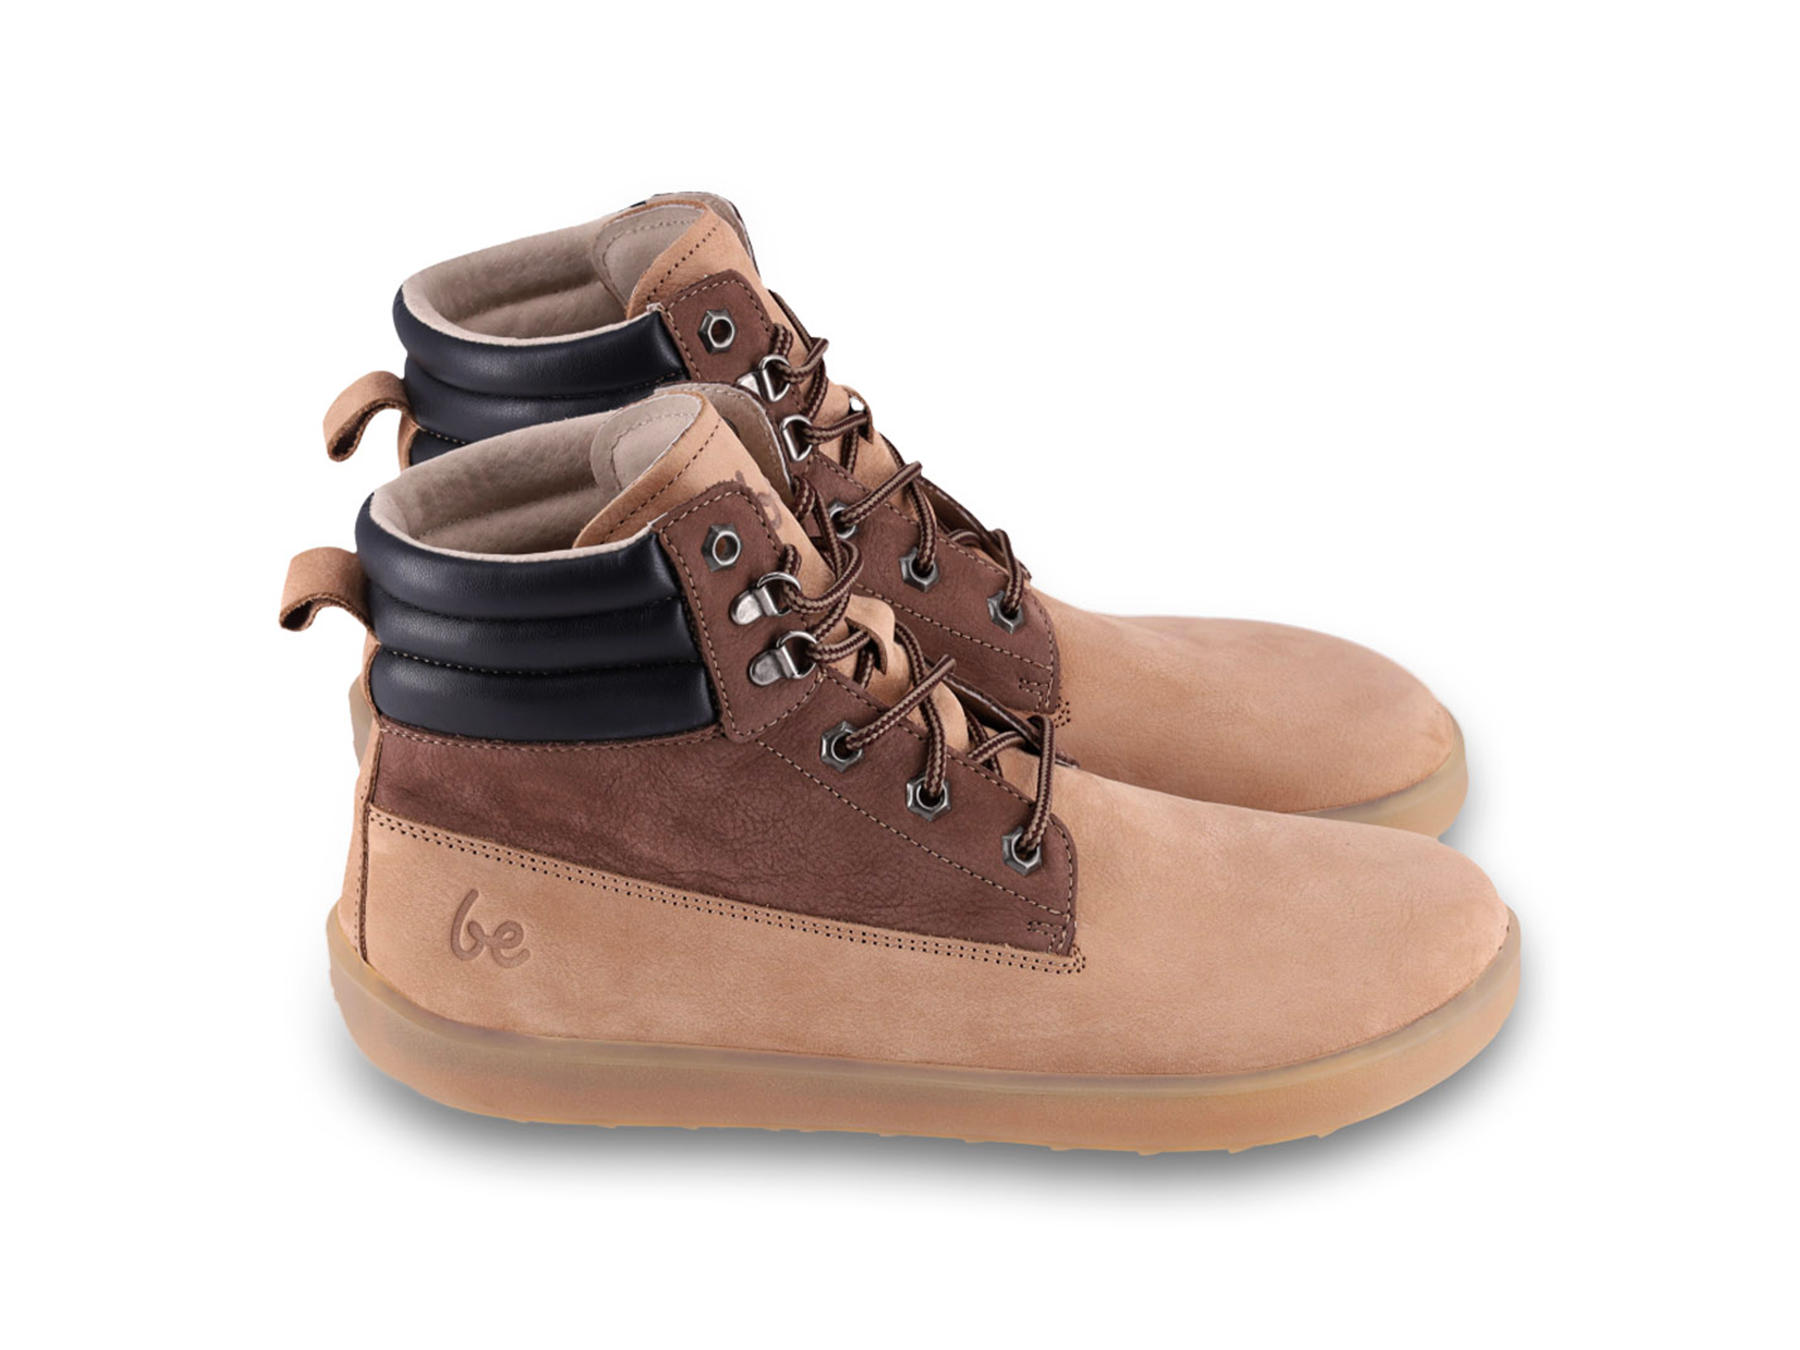 Barefoot Boots Be Lenka Nevada Neo - Sand & Dark Brown - 3